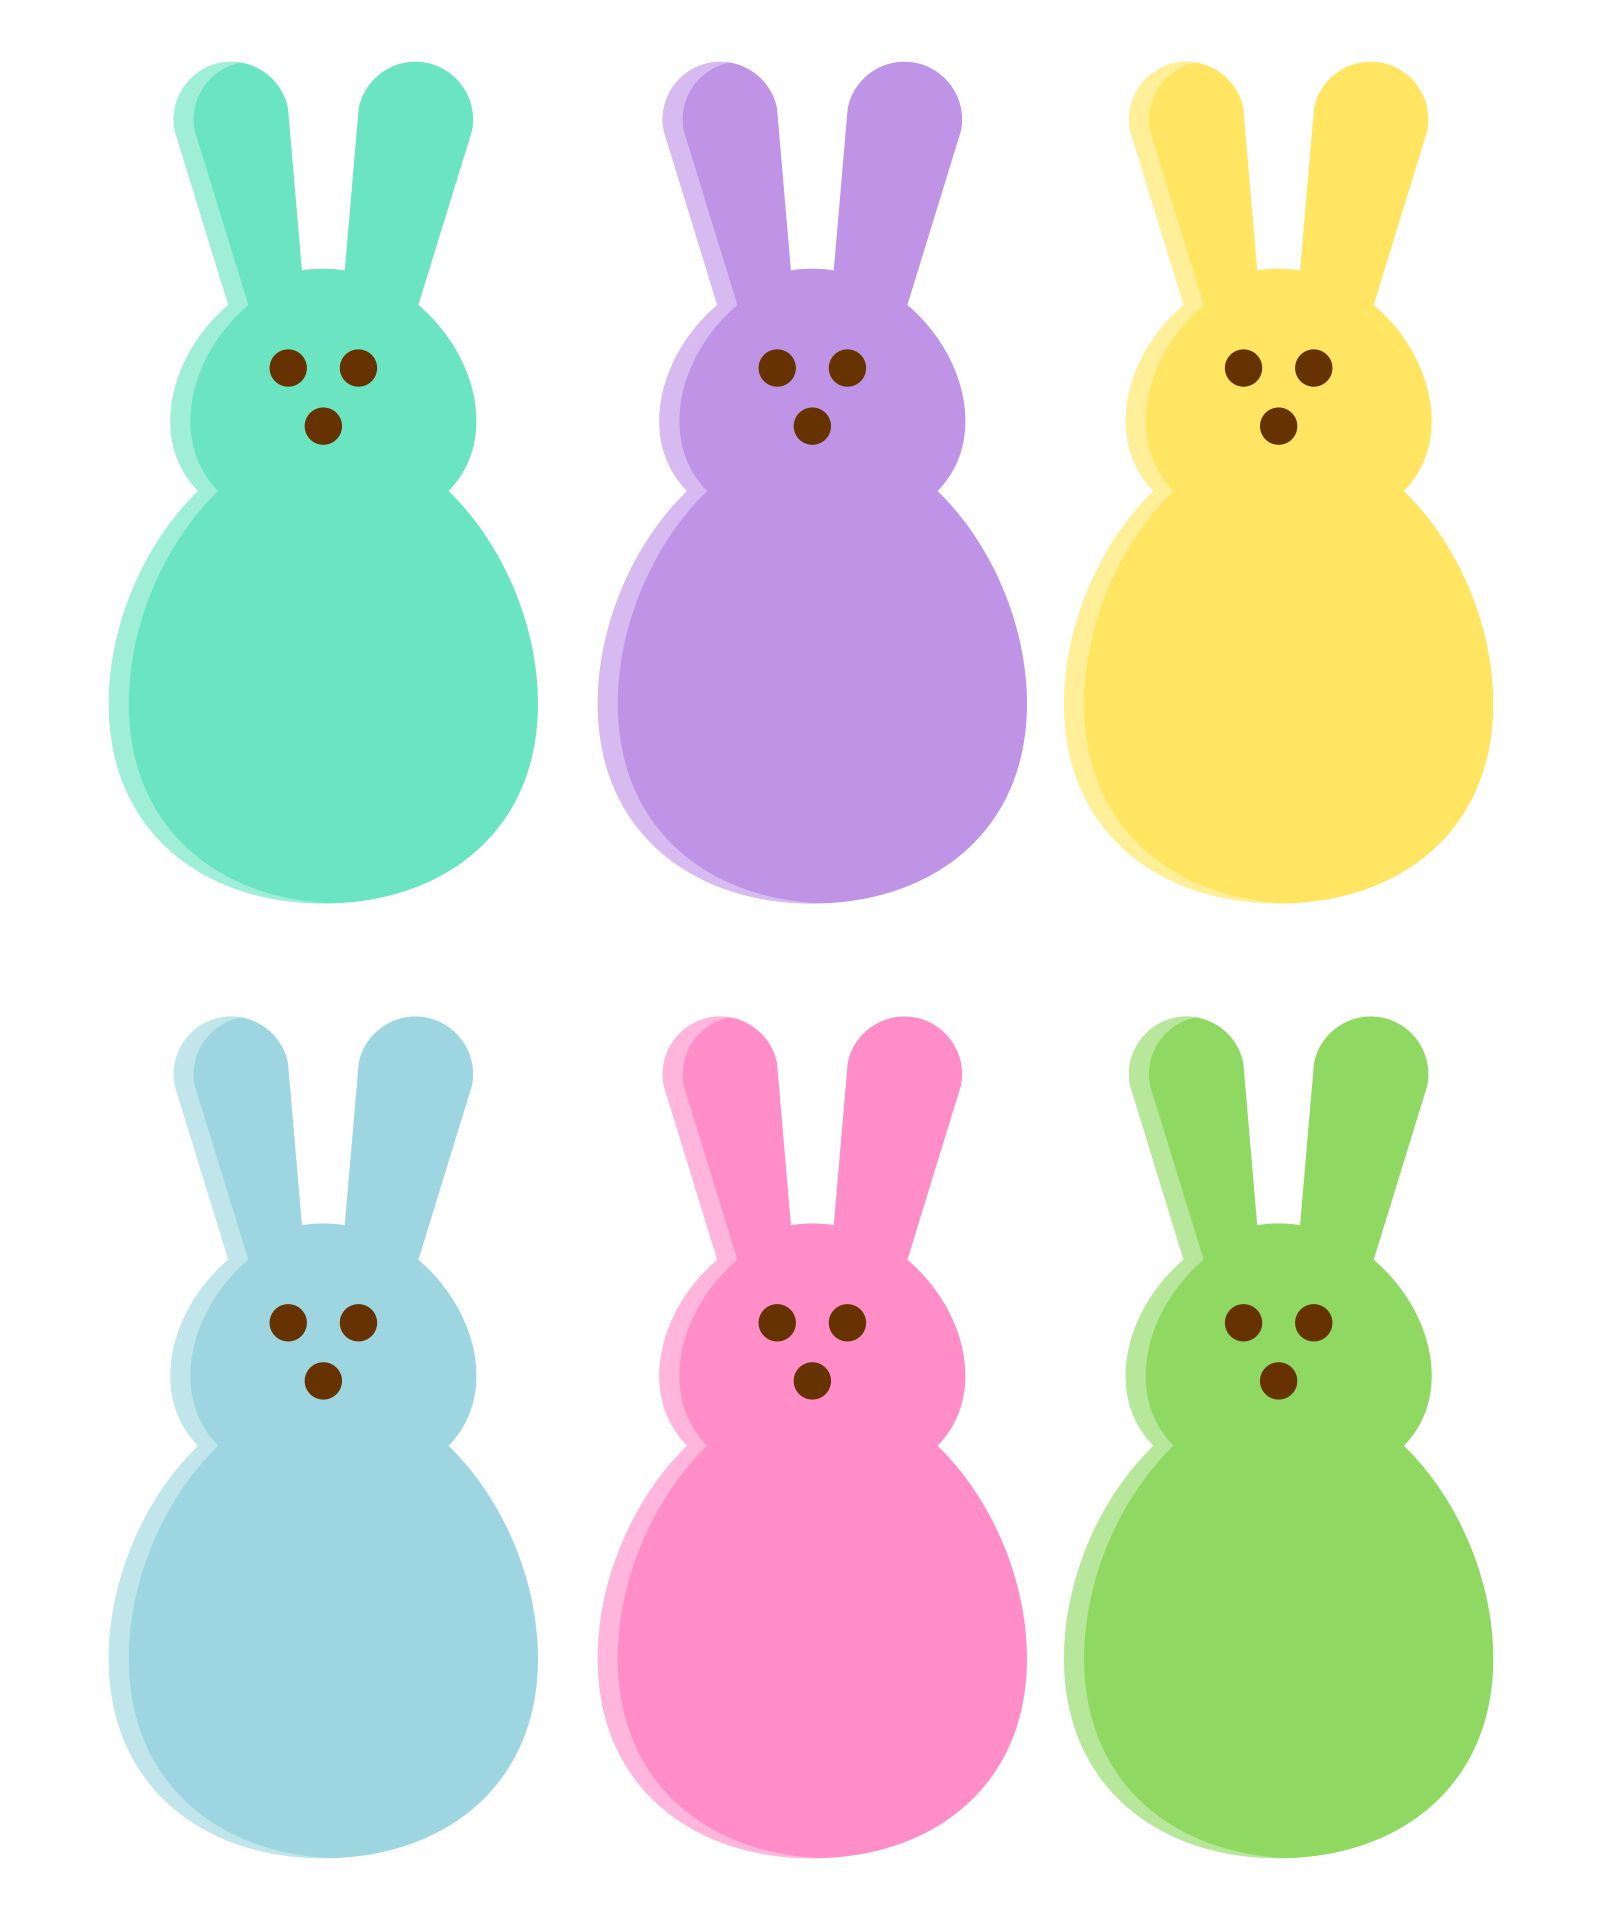 Printable Clip Art of Easter Peeps